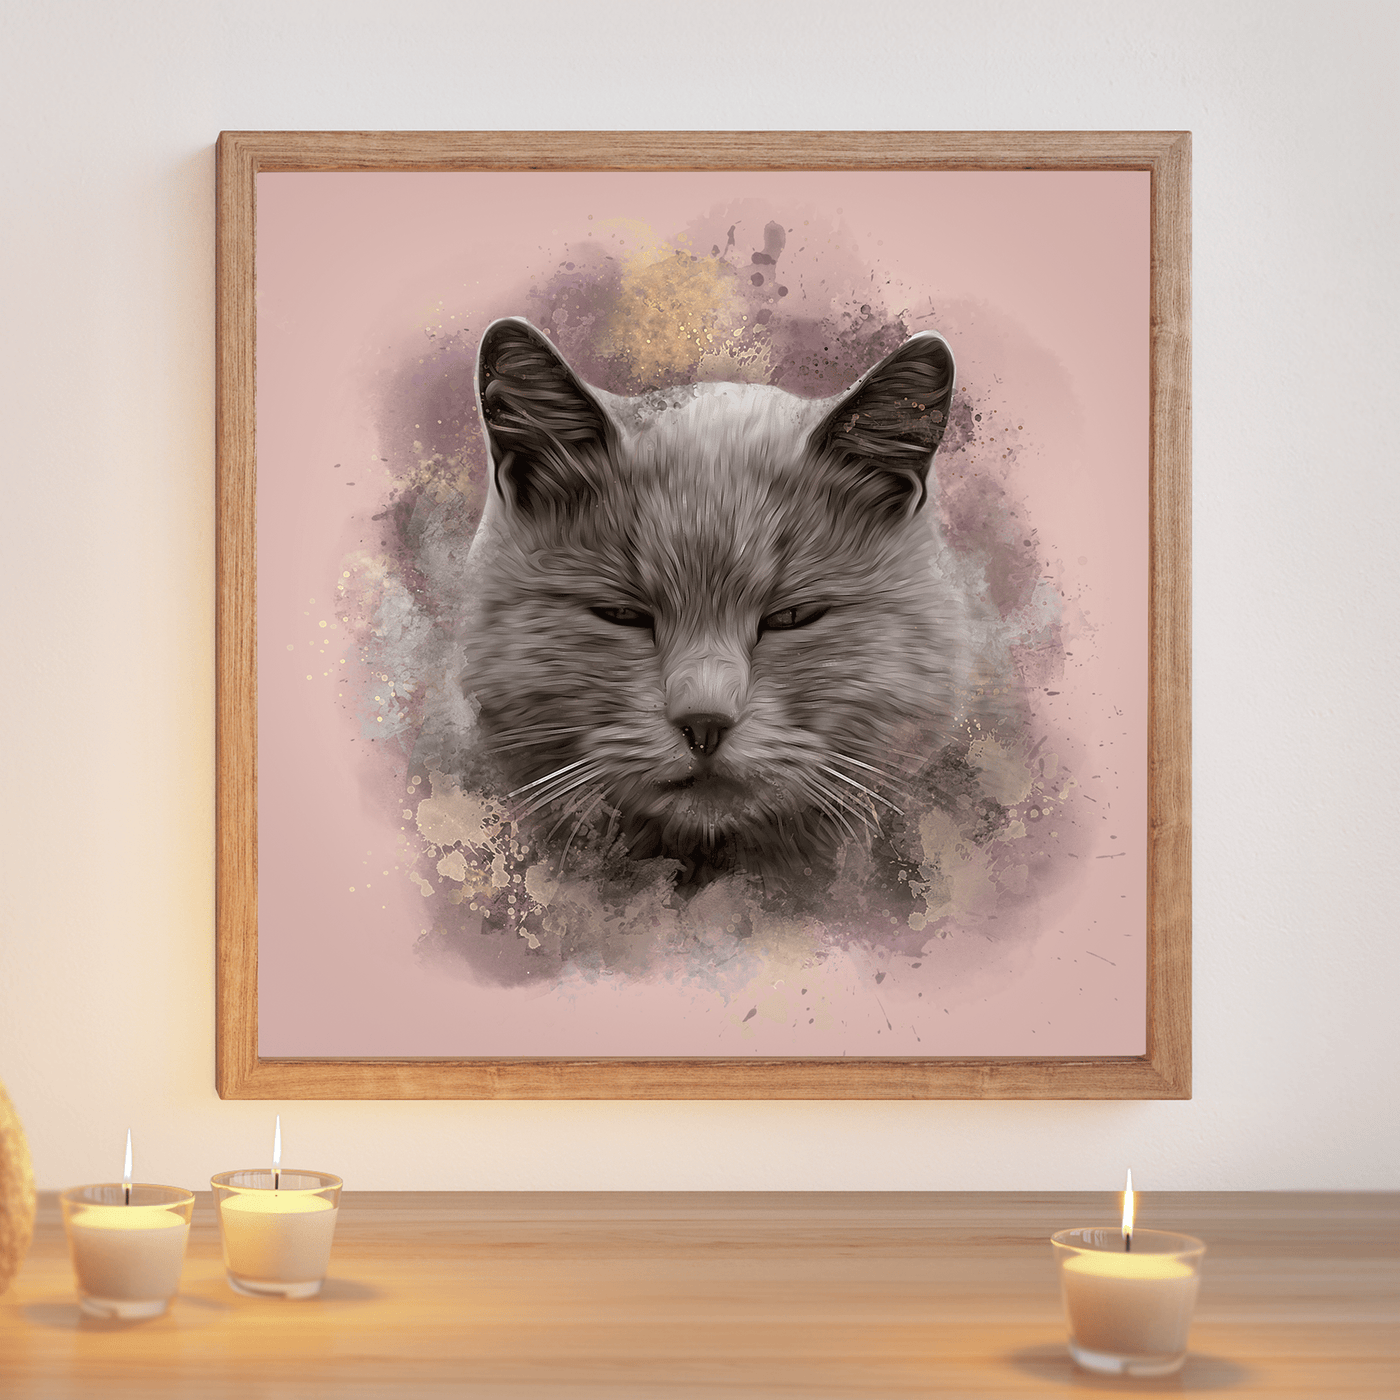 cat digital art of an adorable gray tone cat